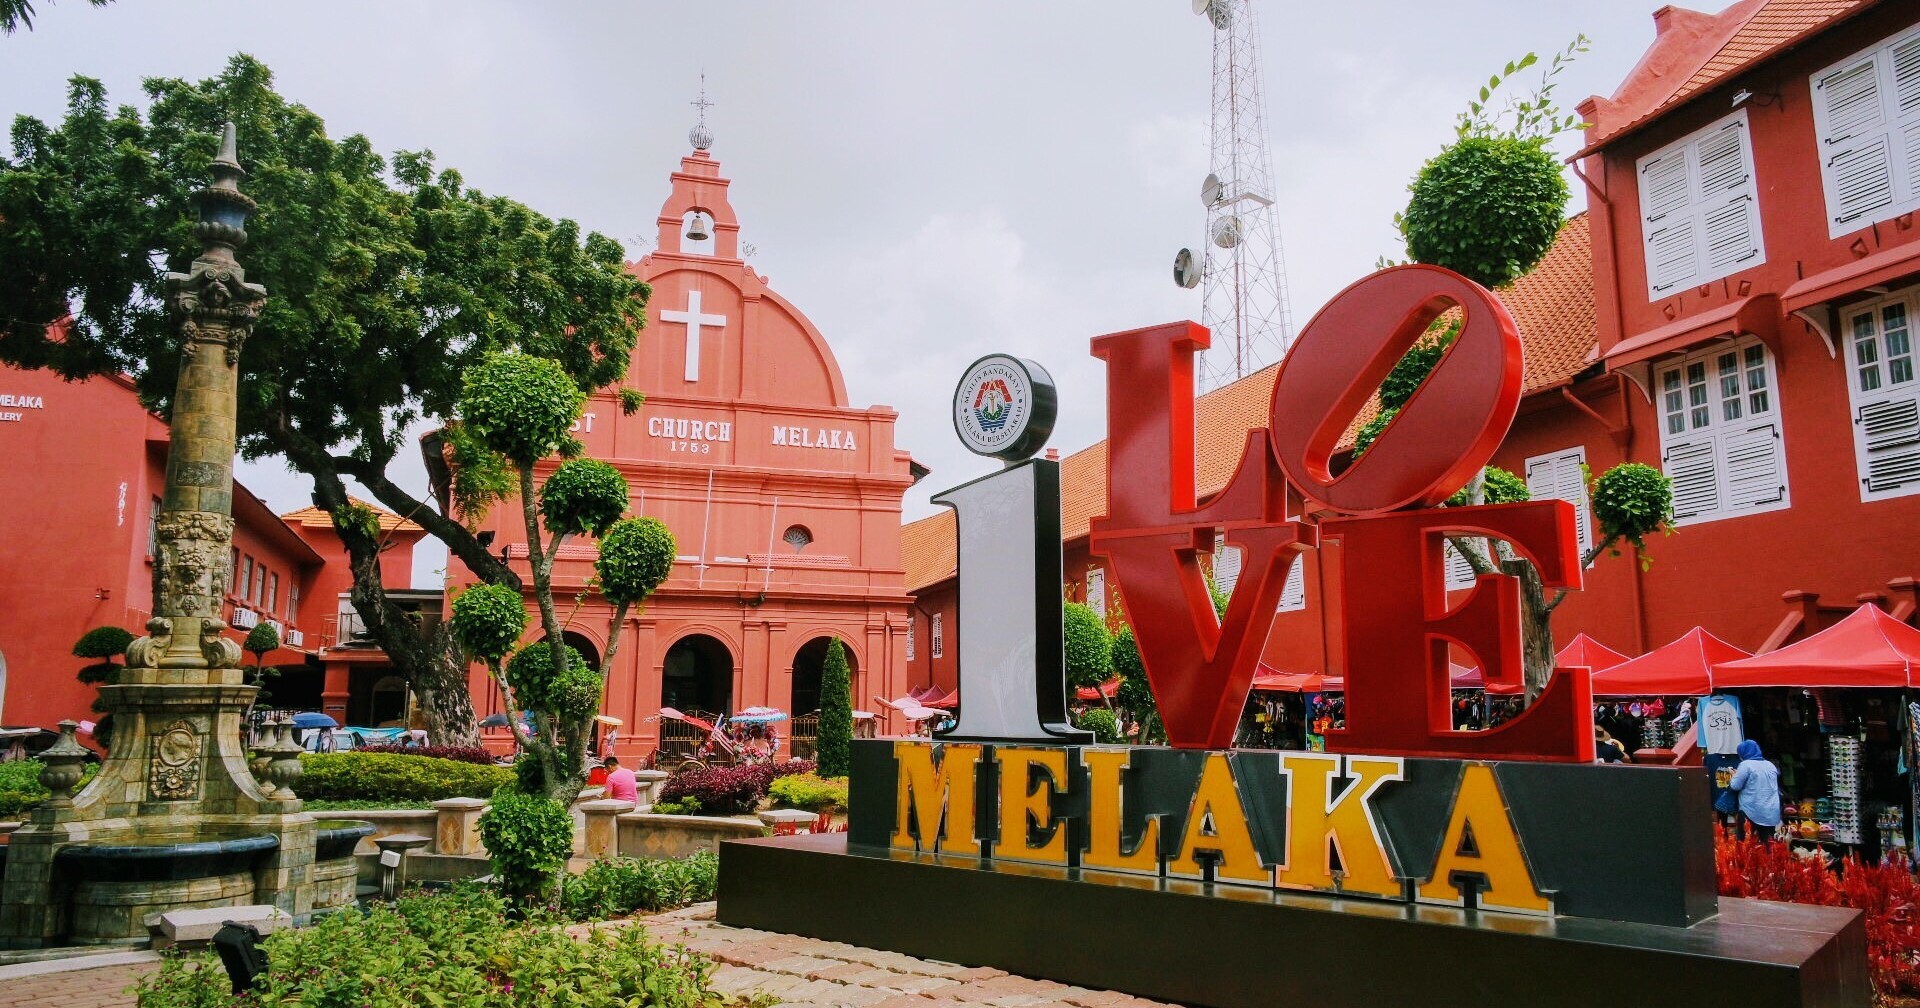 From Now On, Melaka Should No Longer Be Spelled As "Malacca"